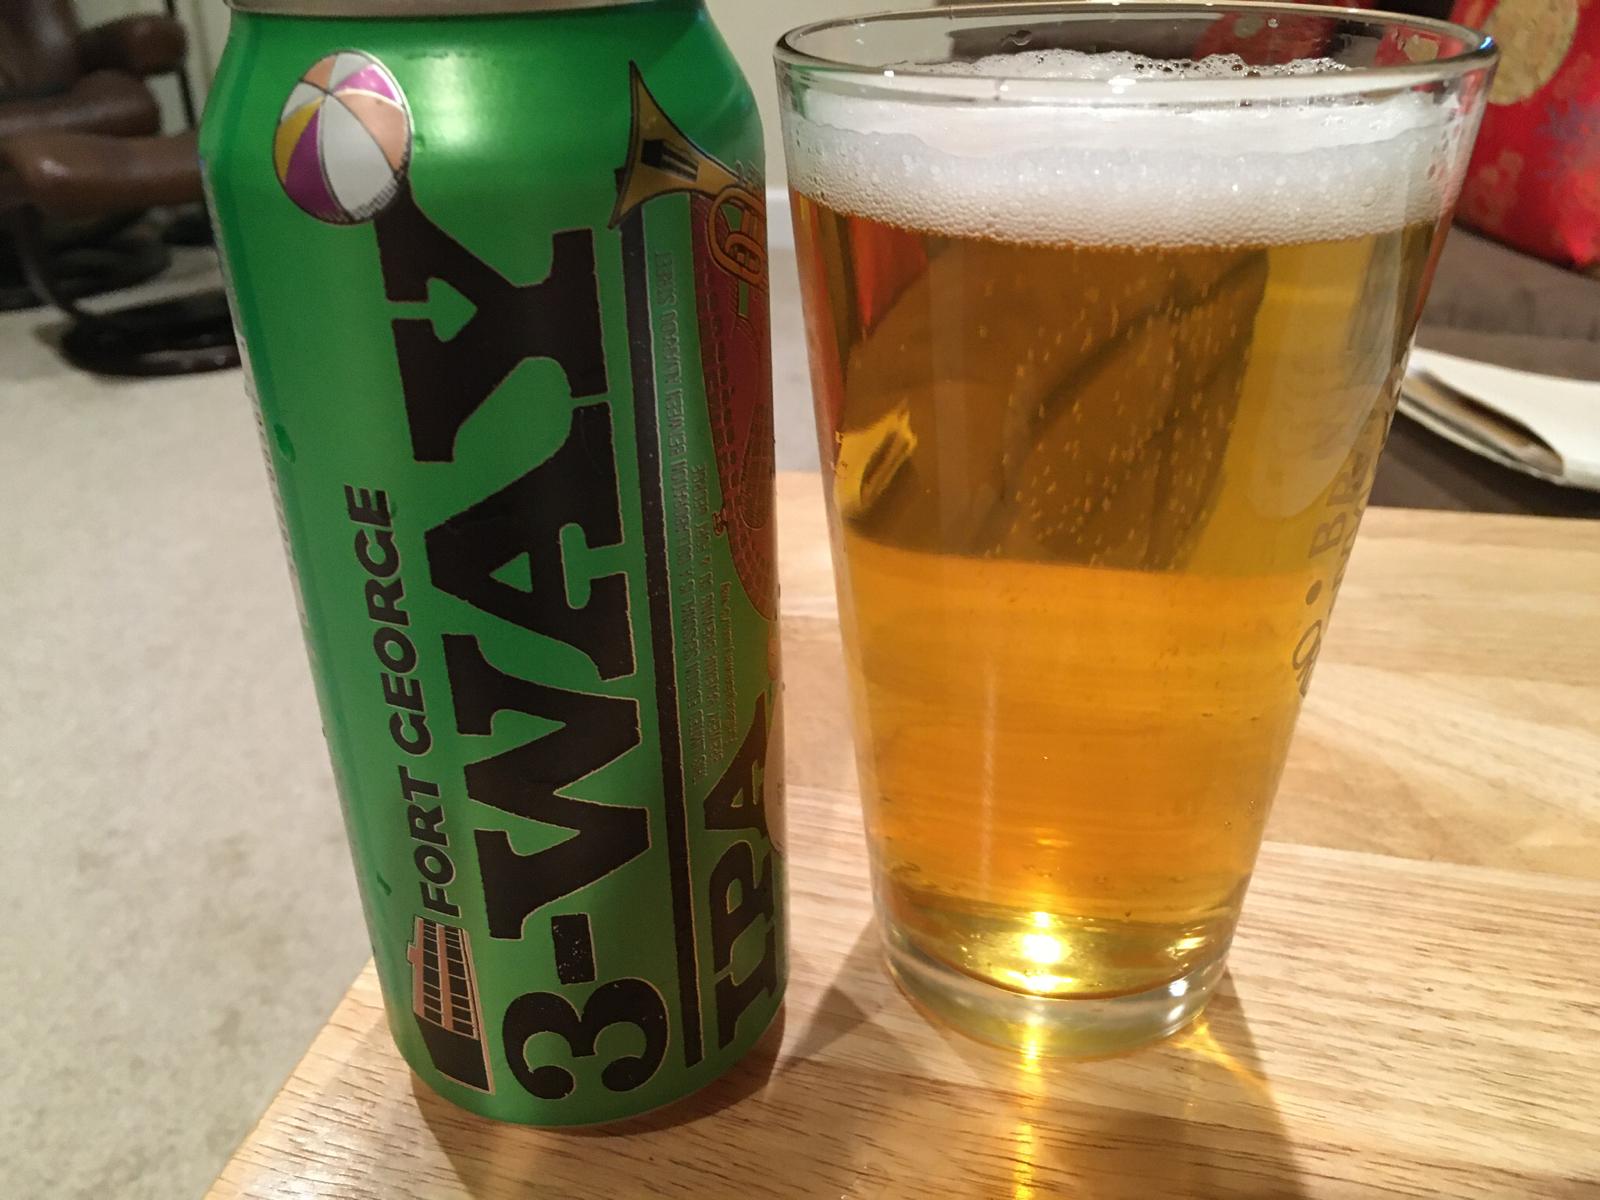 3-Way IPA - 2022 (Collaboration with Alvarado Street Brewery & Ravenna Brewing Company)